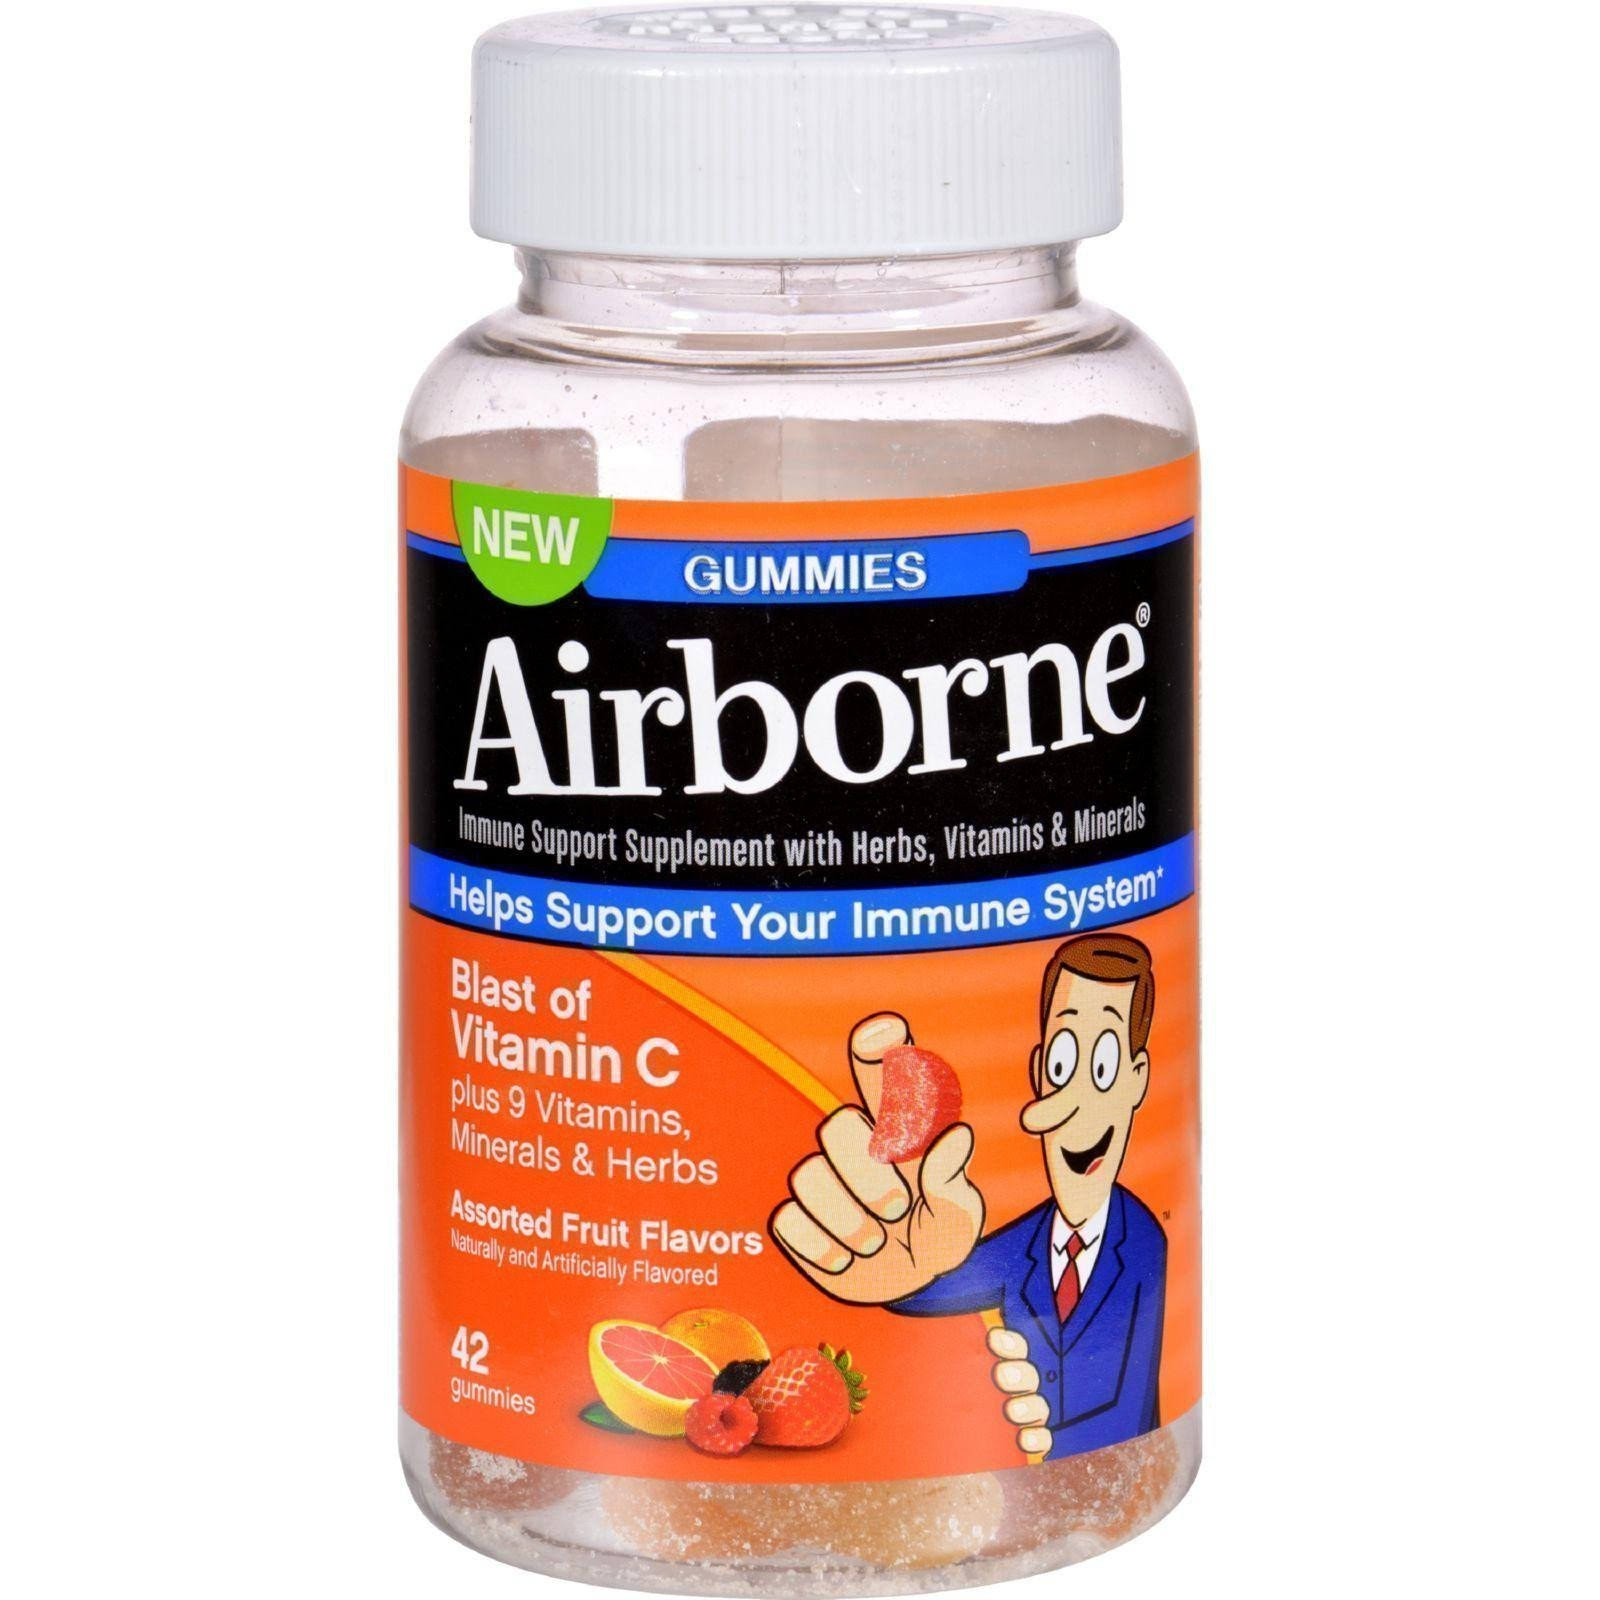 Airborne Immune Support Supplement with Vitamin C Chewable Gummies - 42ct